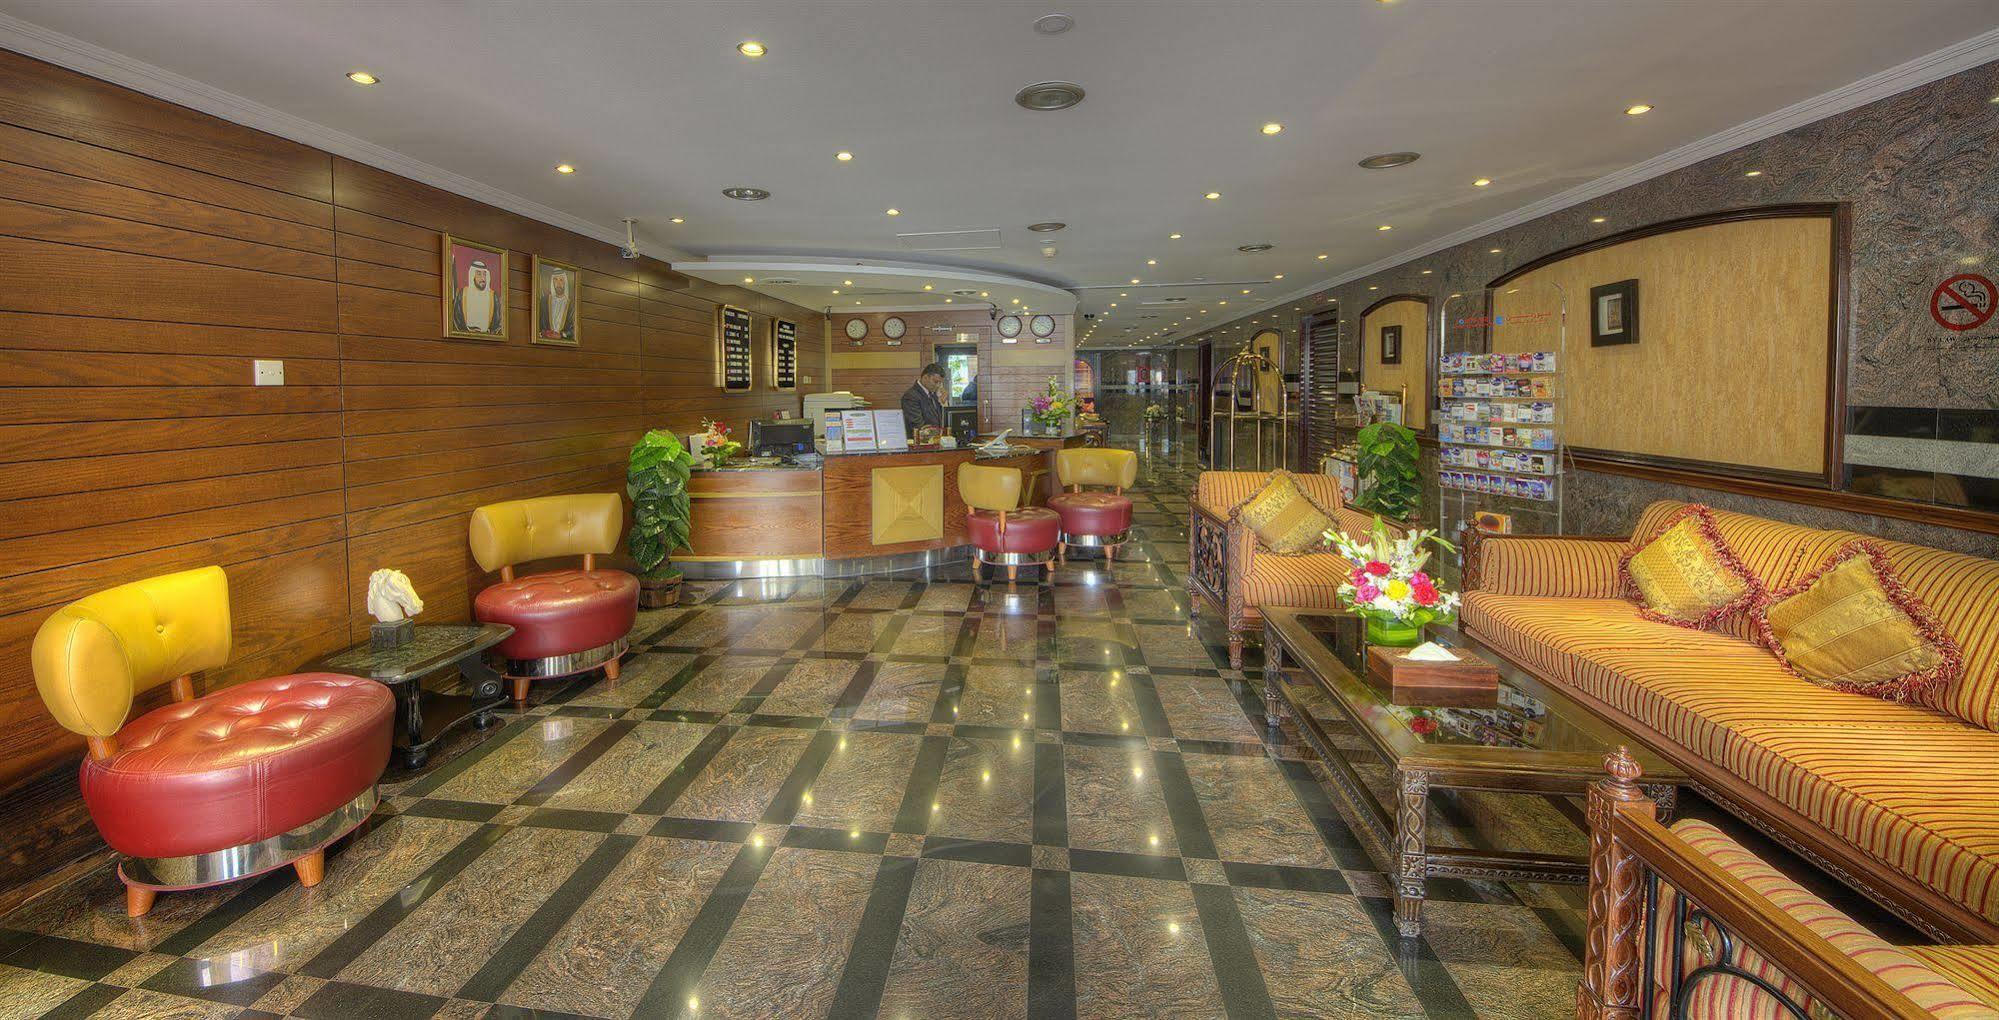 Nihal Residency Hotel Apartments 迪拜 外观 照片